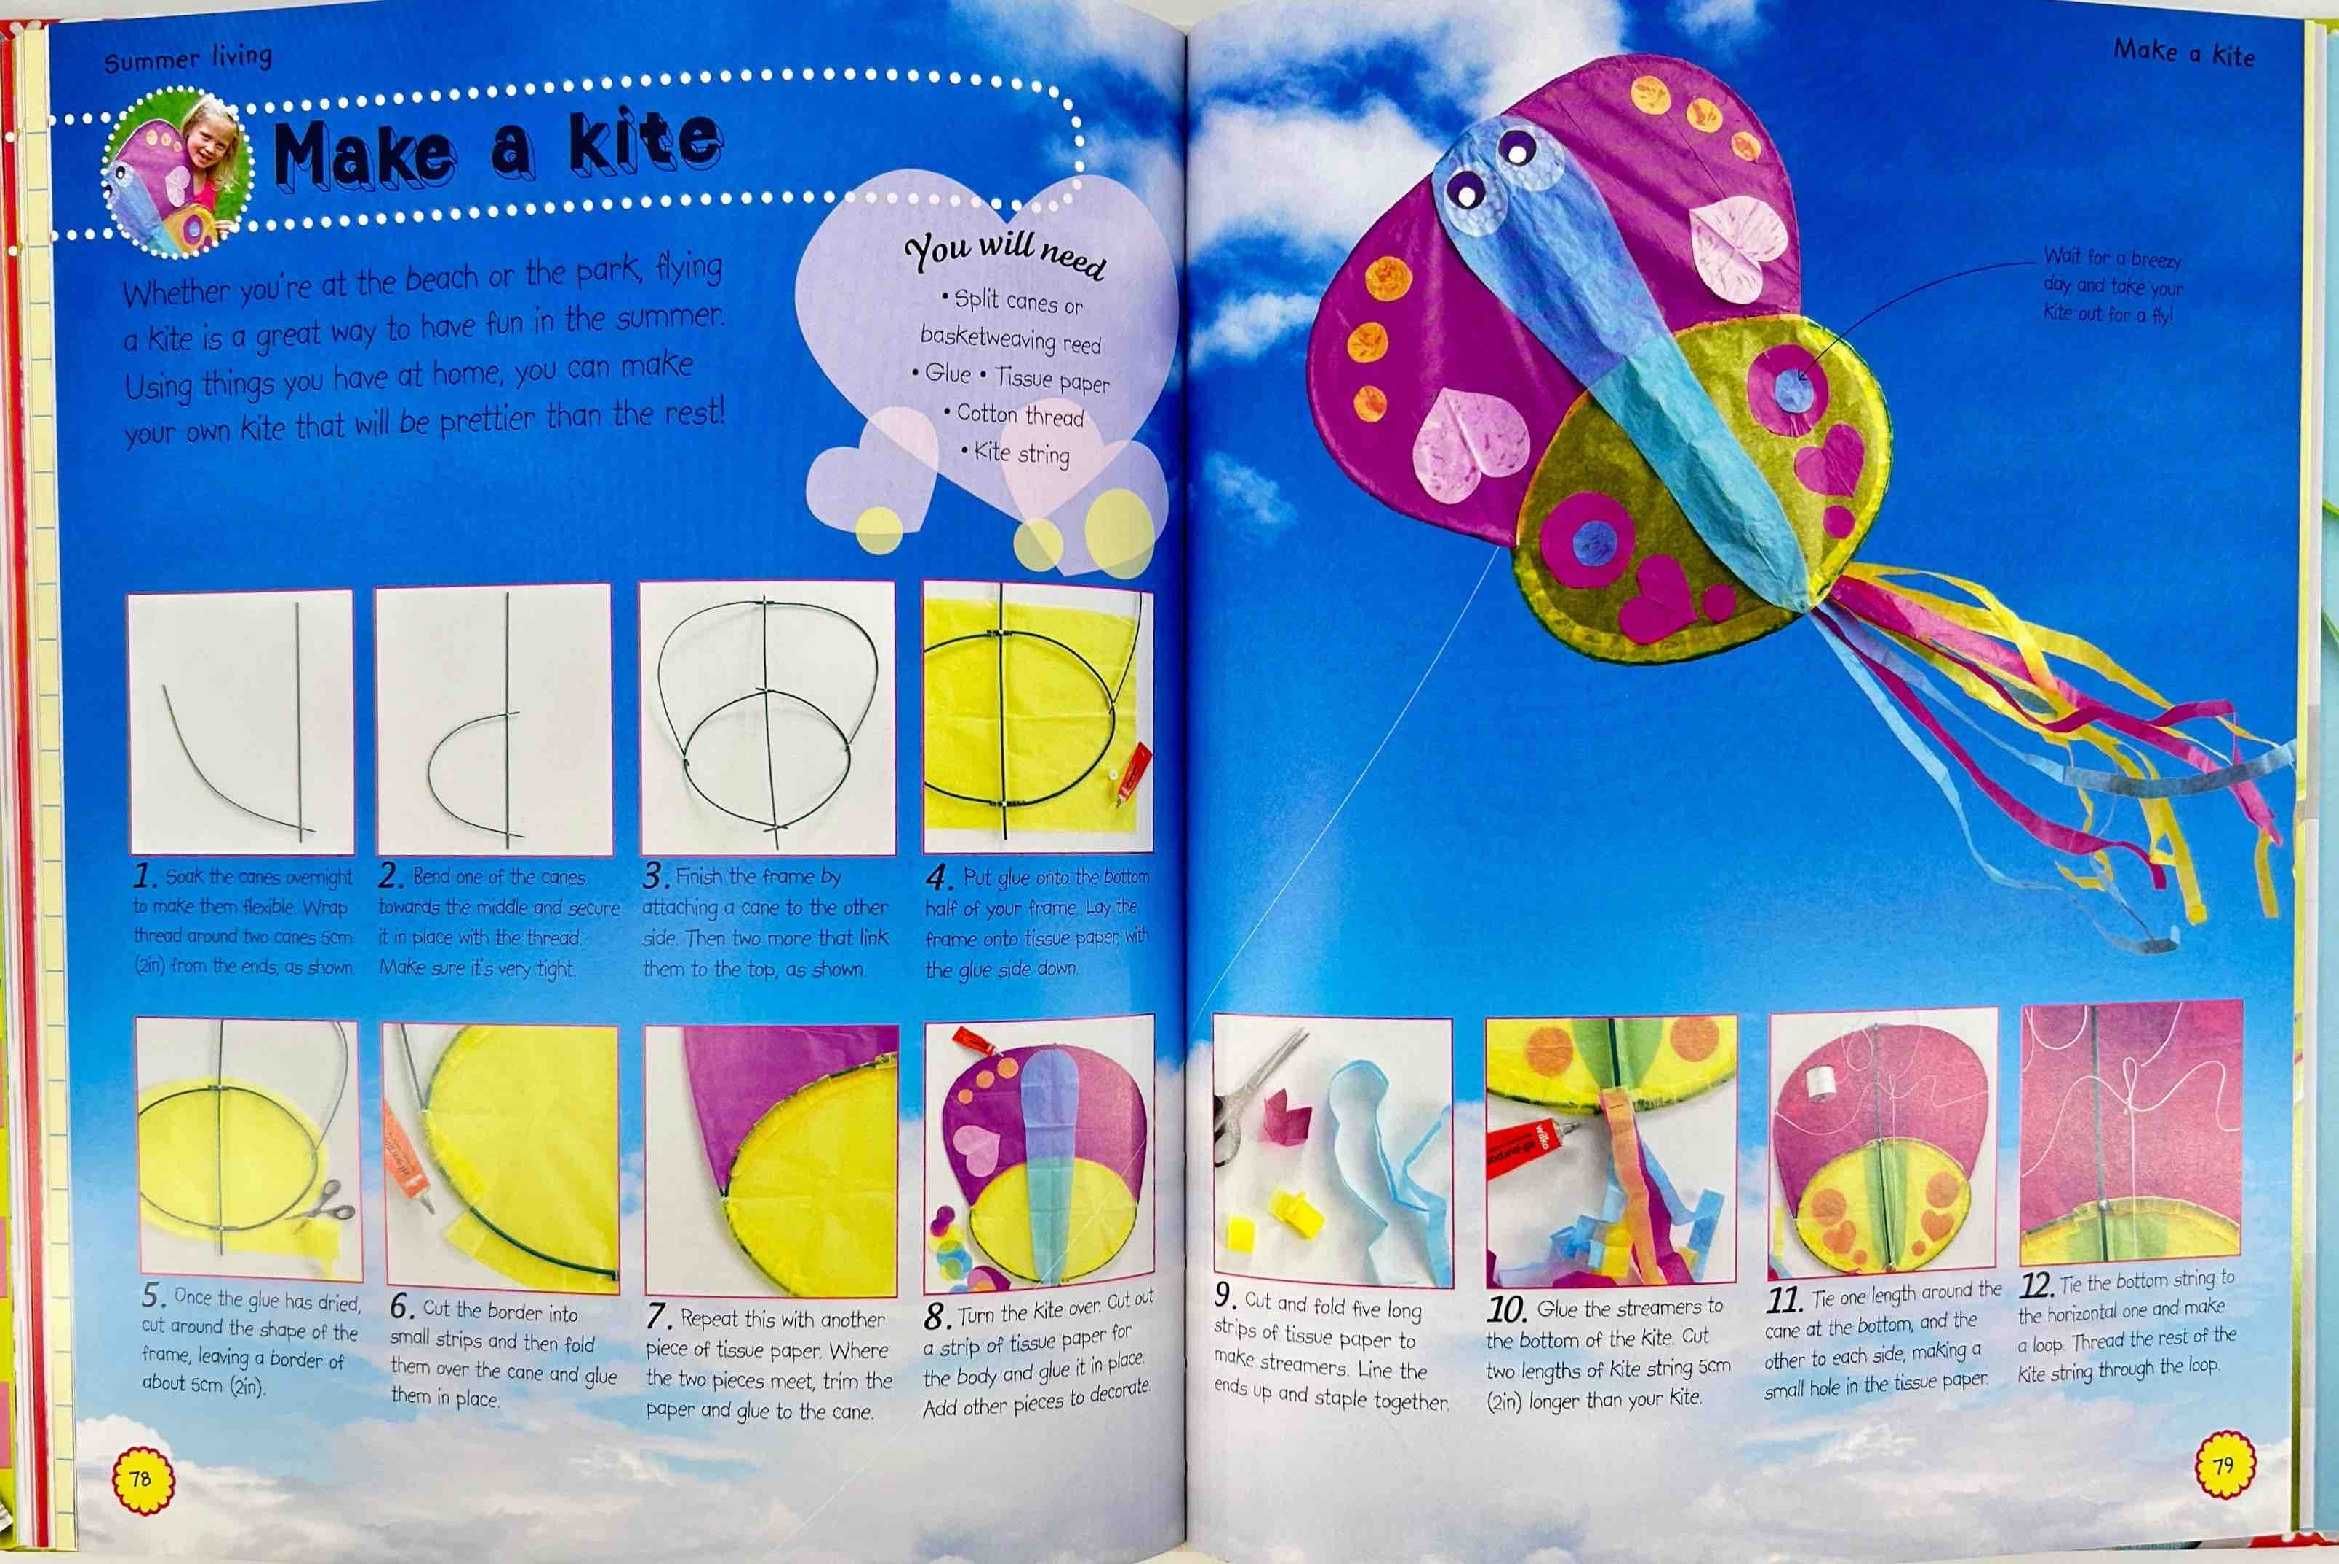 The Girls' book of crafts and activities spędzanie czasu po angielsku